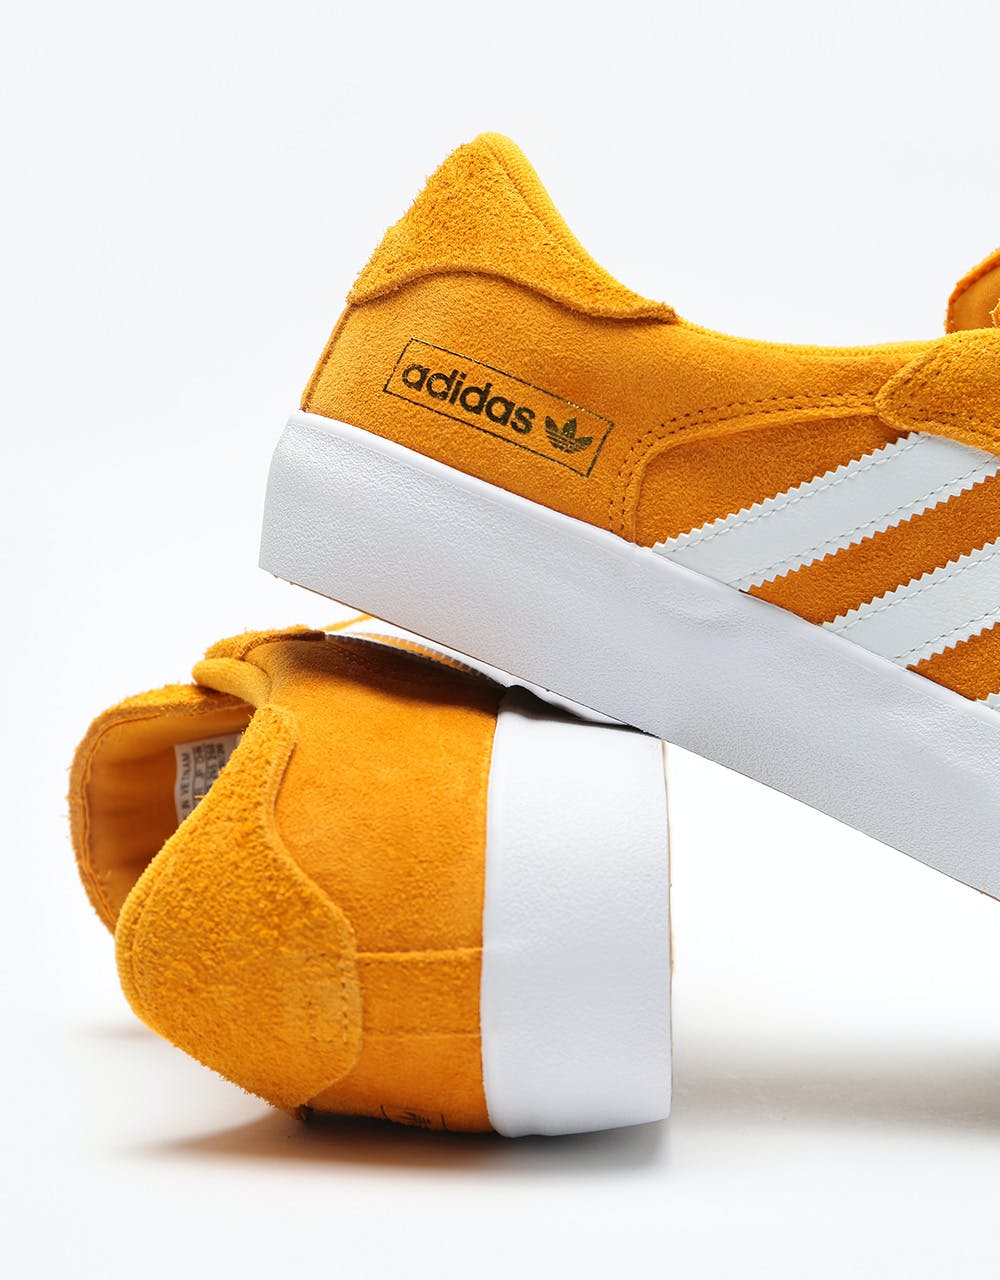 Adidas Matchbreak Super Skate Shoes - Tactile Yellow/White/Gold Metall